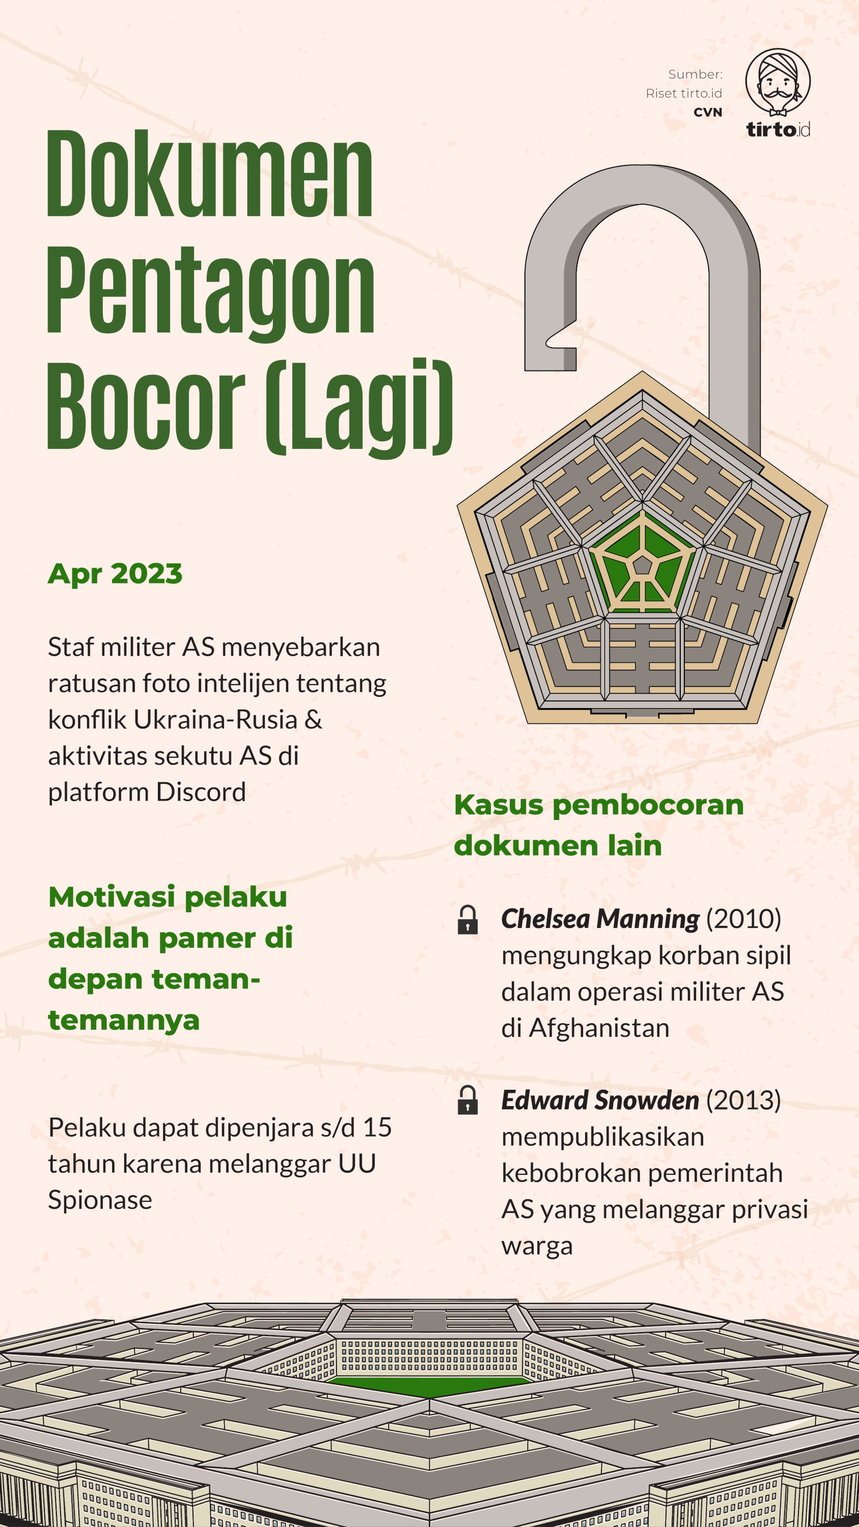 Infografik Dokumen Pentagon Bocor